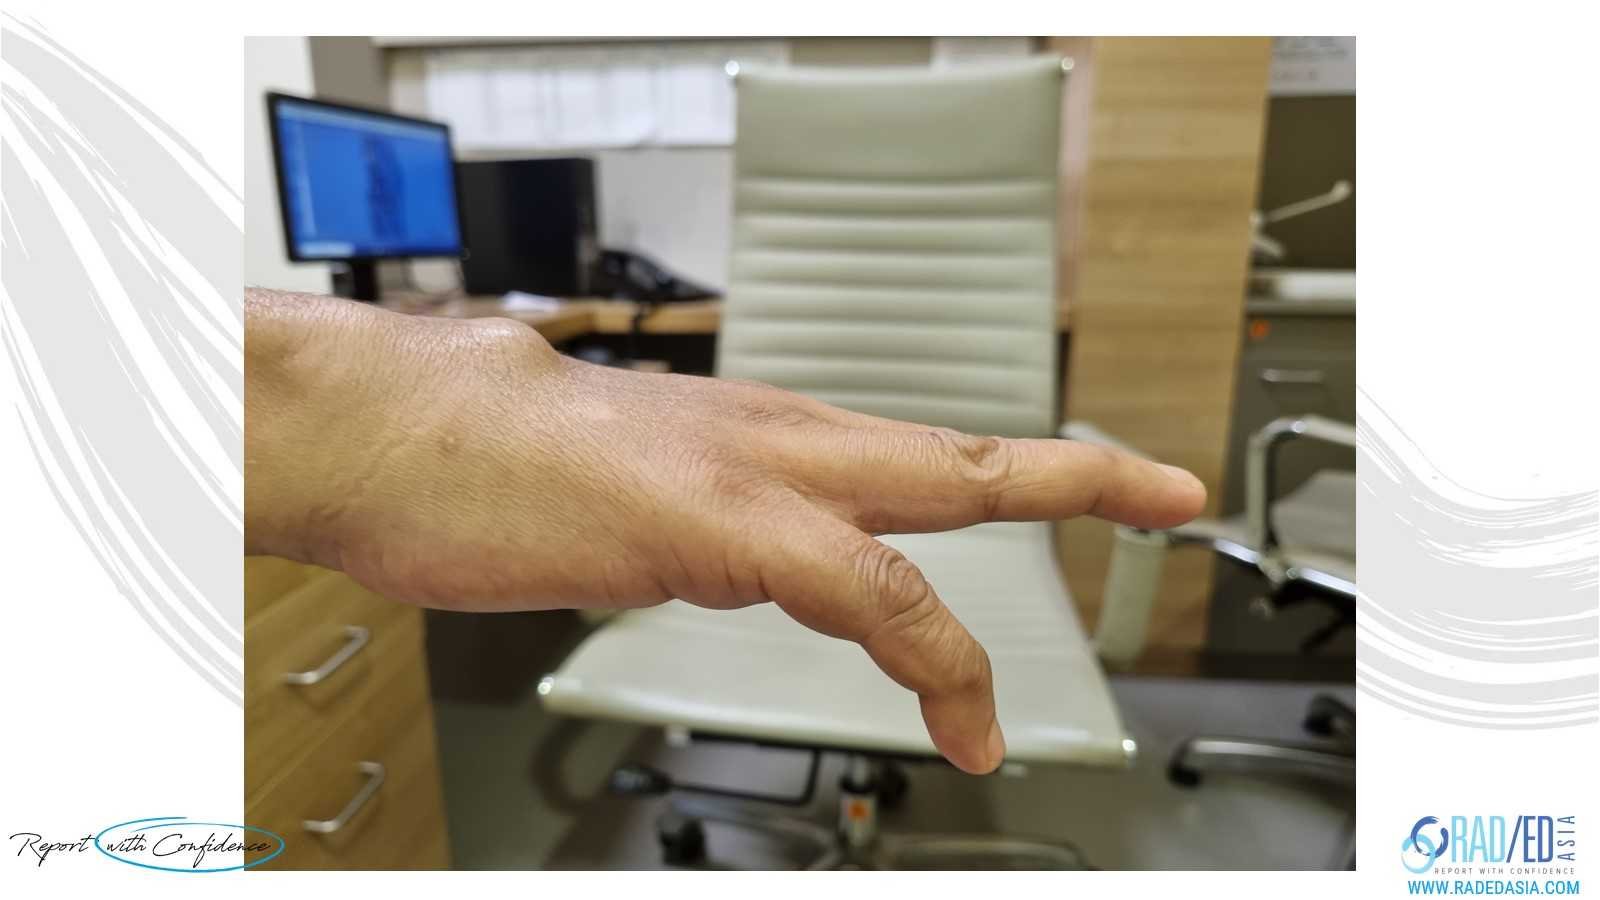 wrist rheumatoid arthritis Vaughn Jackson Syndrome wrist clinical radedasia